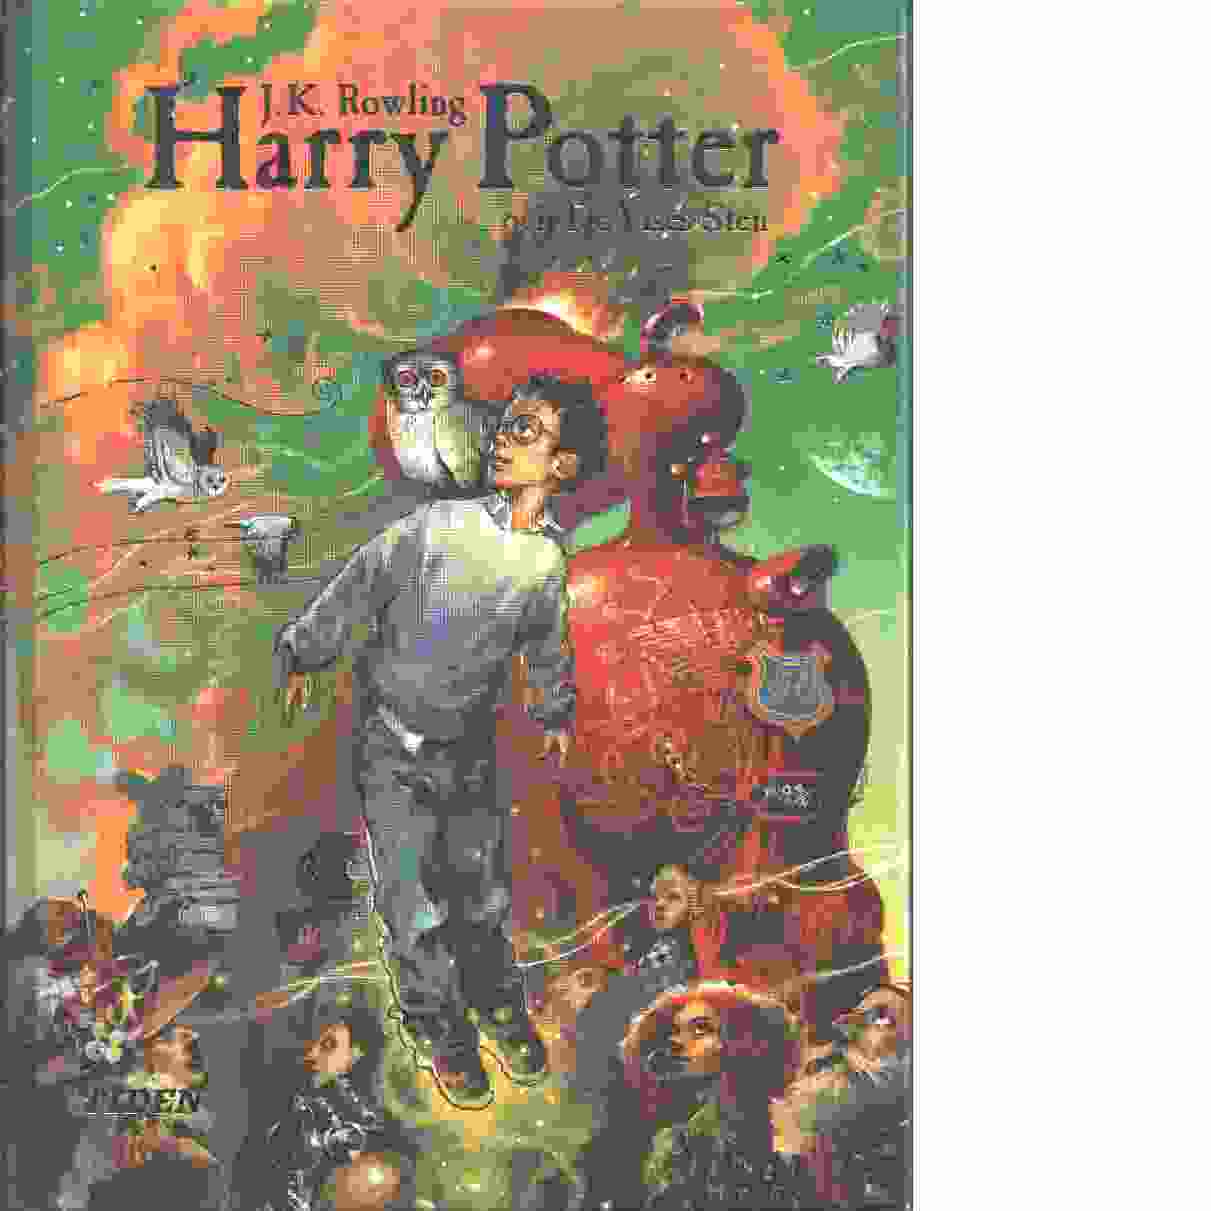 Harry Potter och de vises sten - Rowling, J. K.